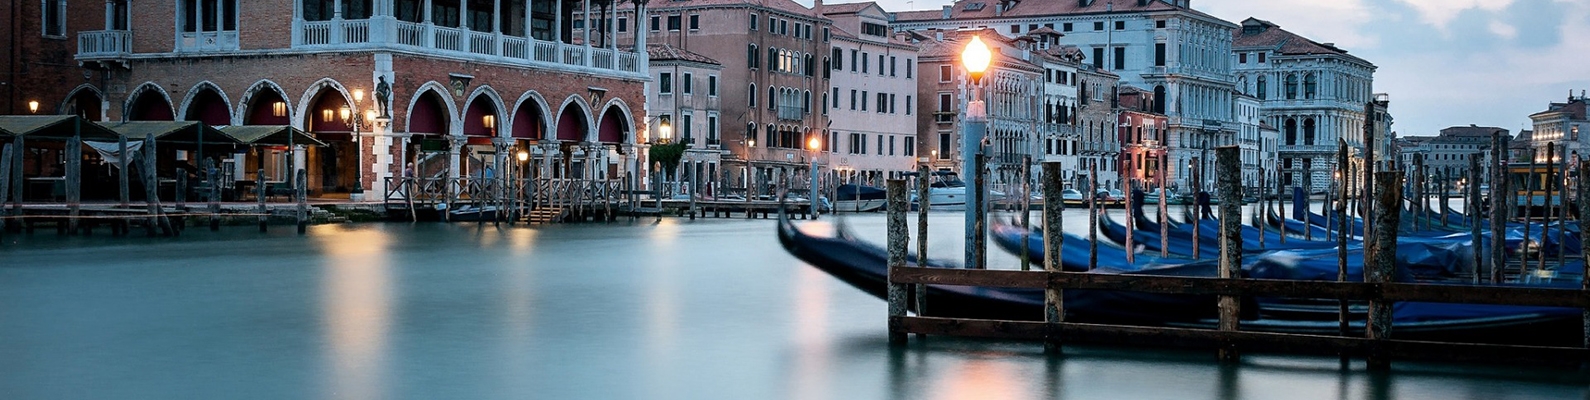 река, Venice, дома, лодки